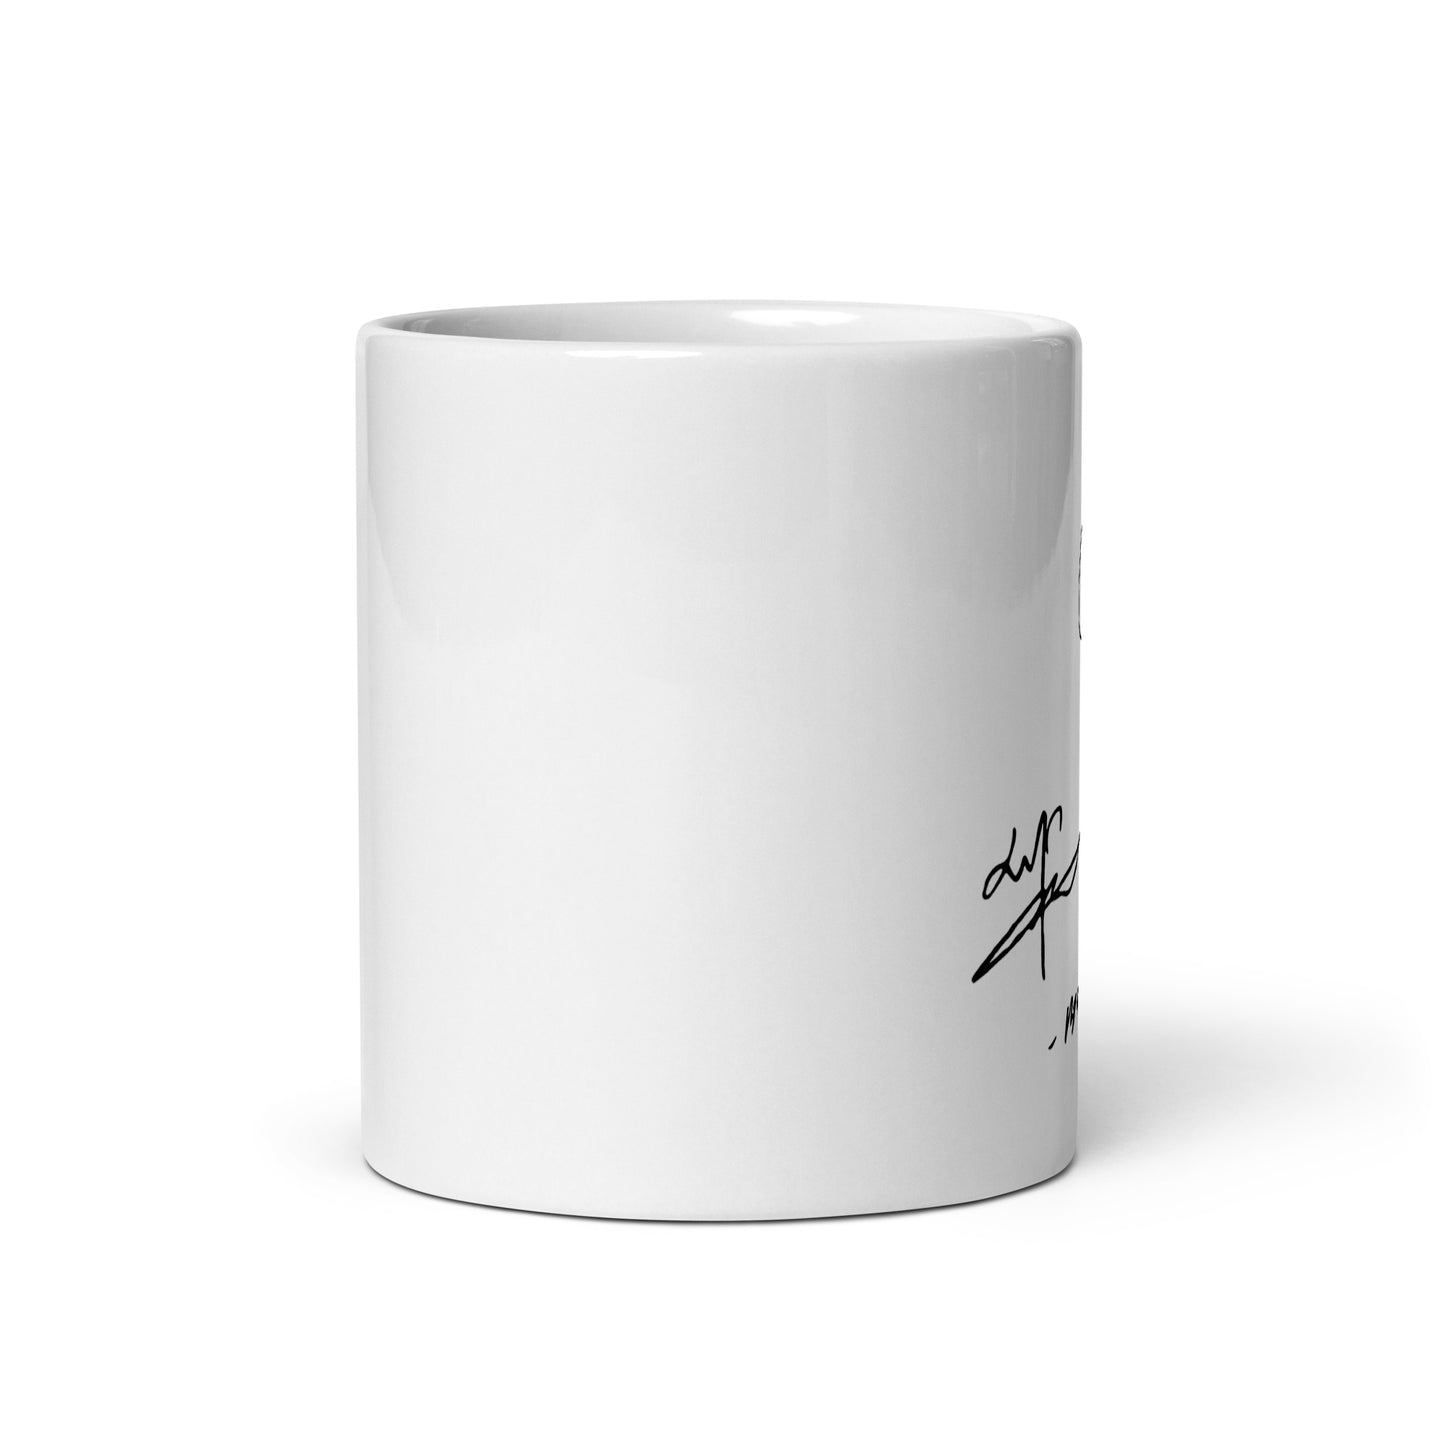 BTS Jimin, Park Ji-min Signature Ceramic Mug